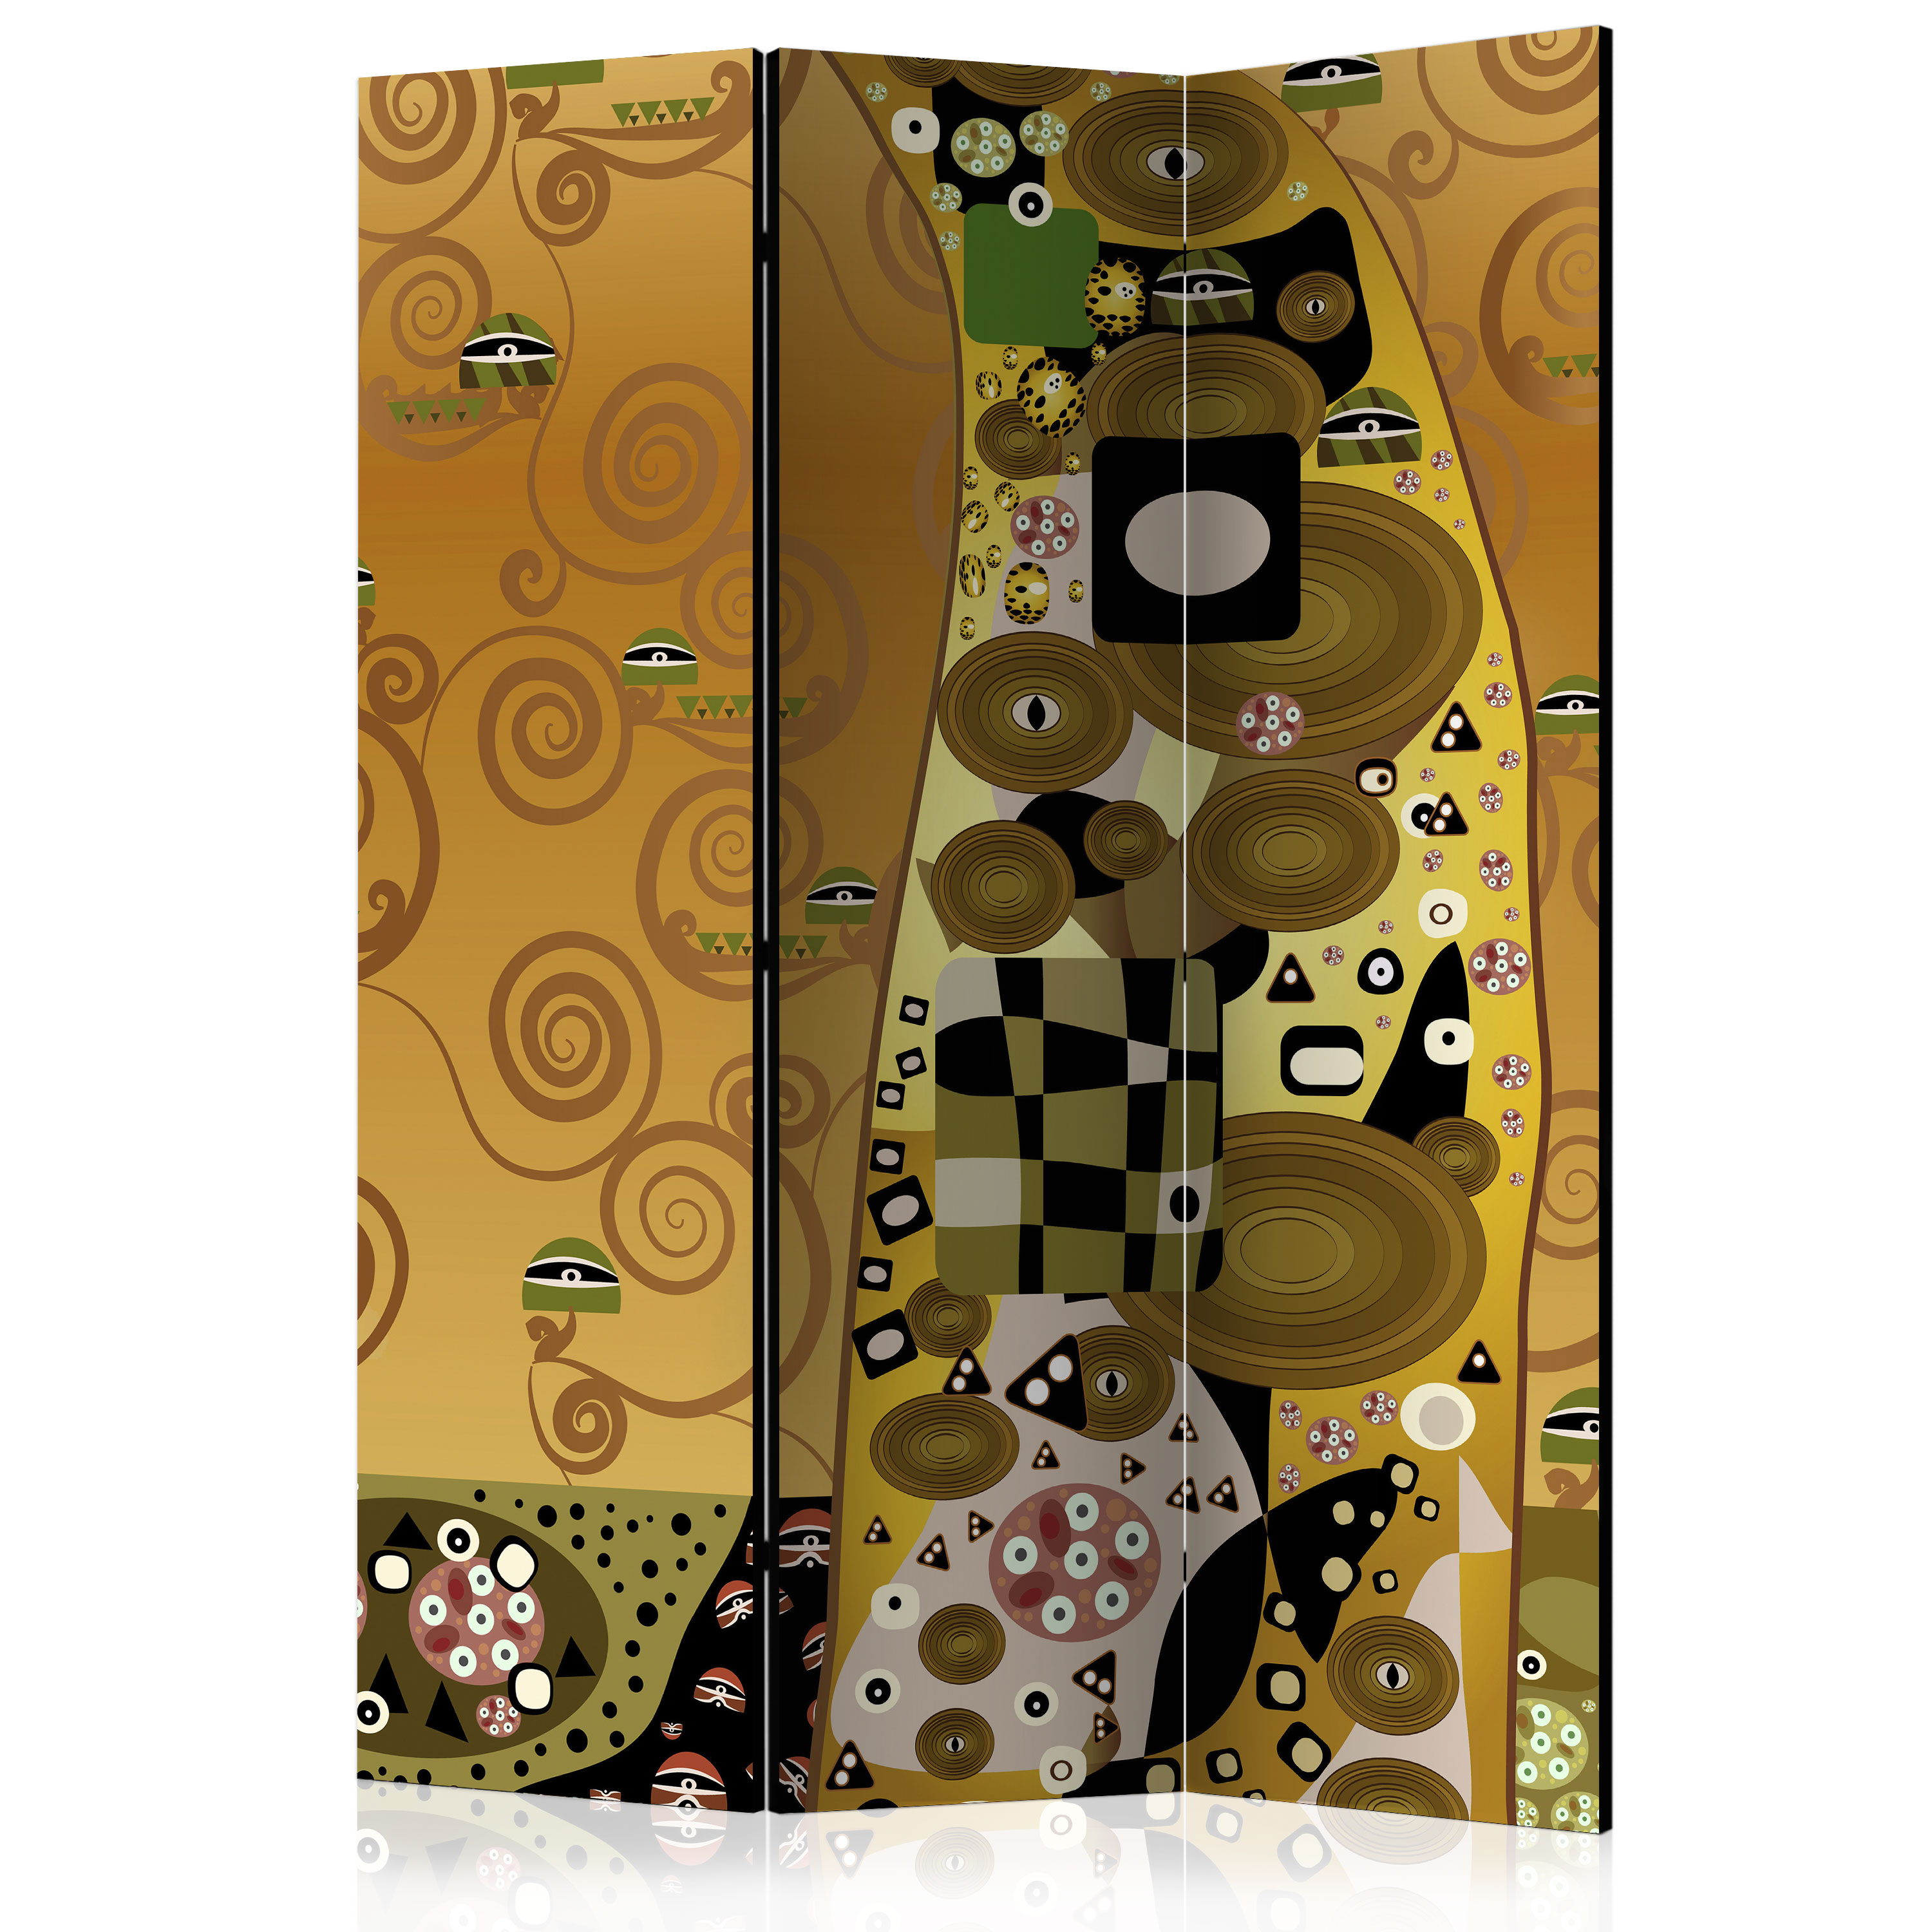 PARAVENTO PARETE DIVISORIA Interno Separatore Klimt 5 disegni l-A-0001-z-c  EUR 179,99 - PicClick IT